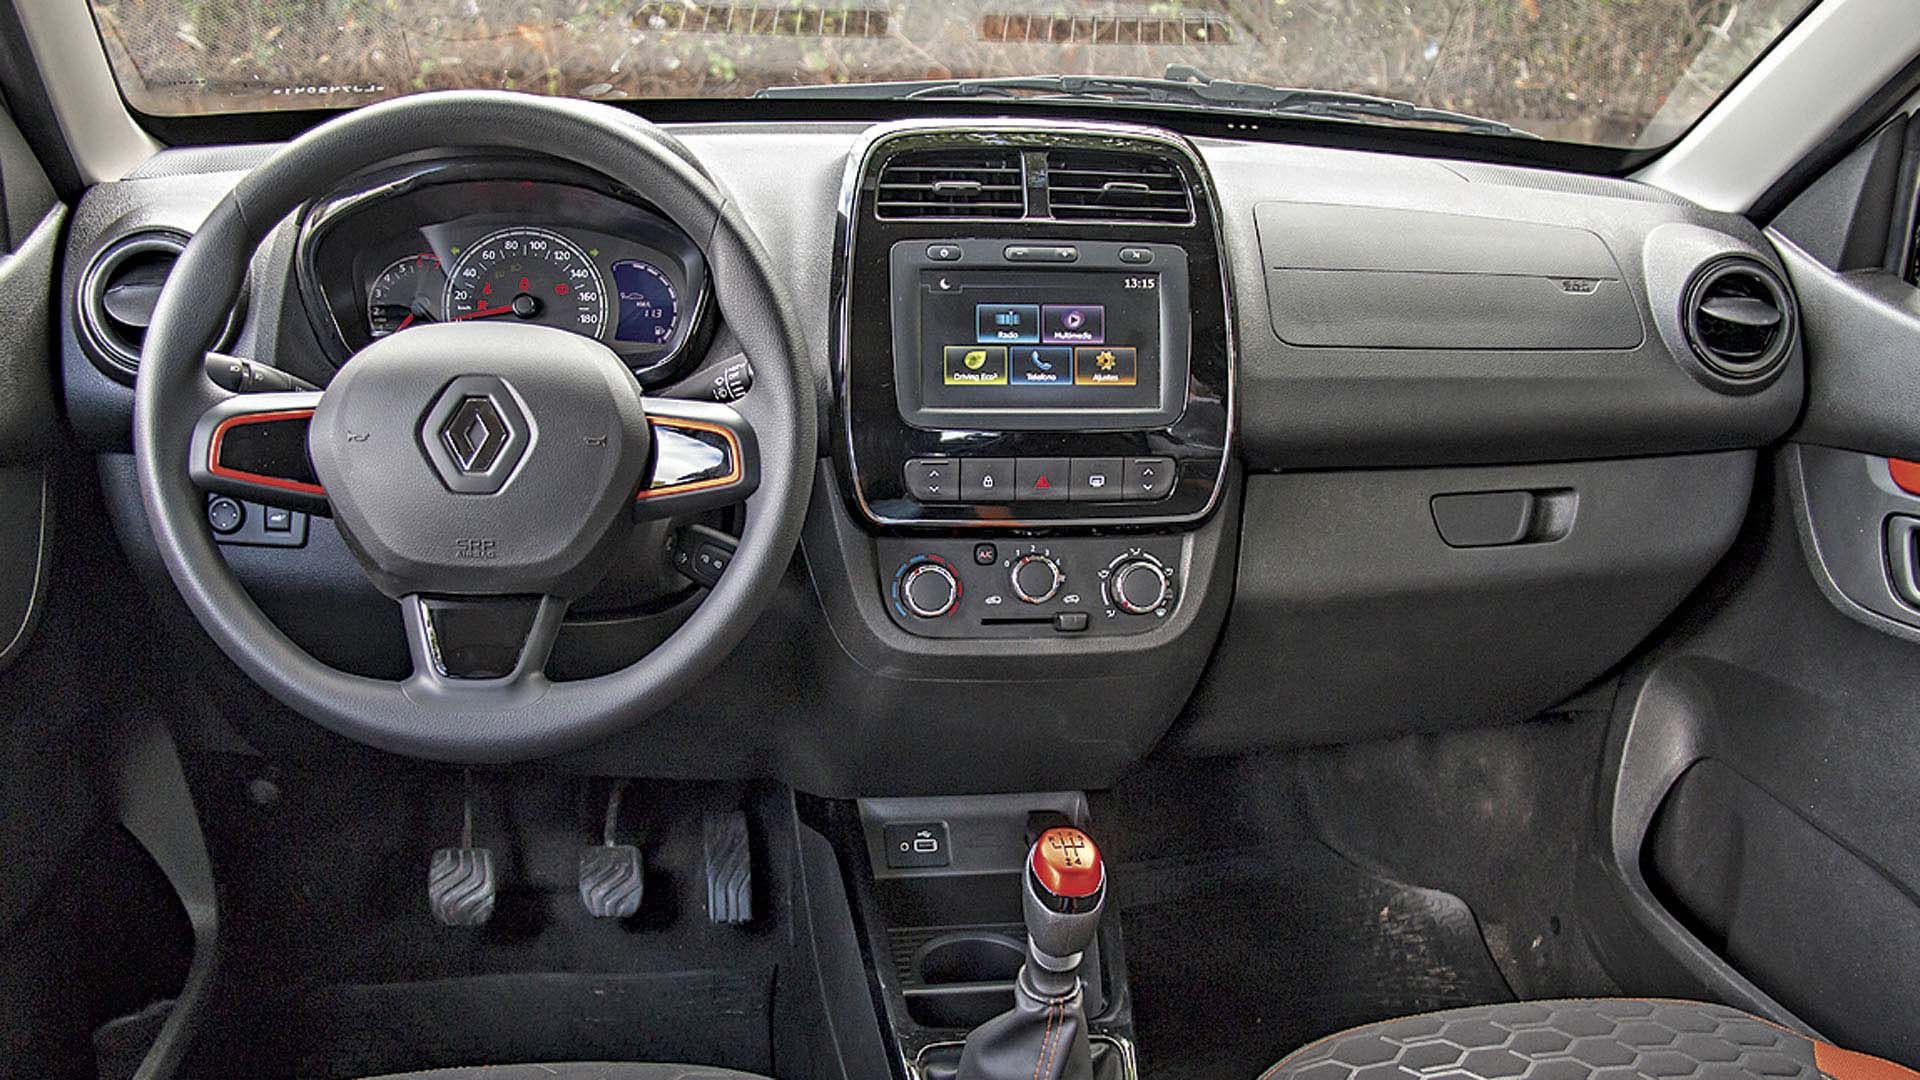 Parabrisas Probamos El Nuevo Renault Kwid Outsider